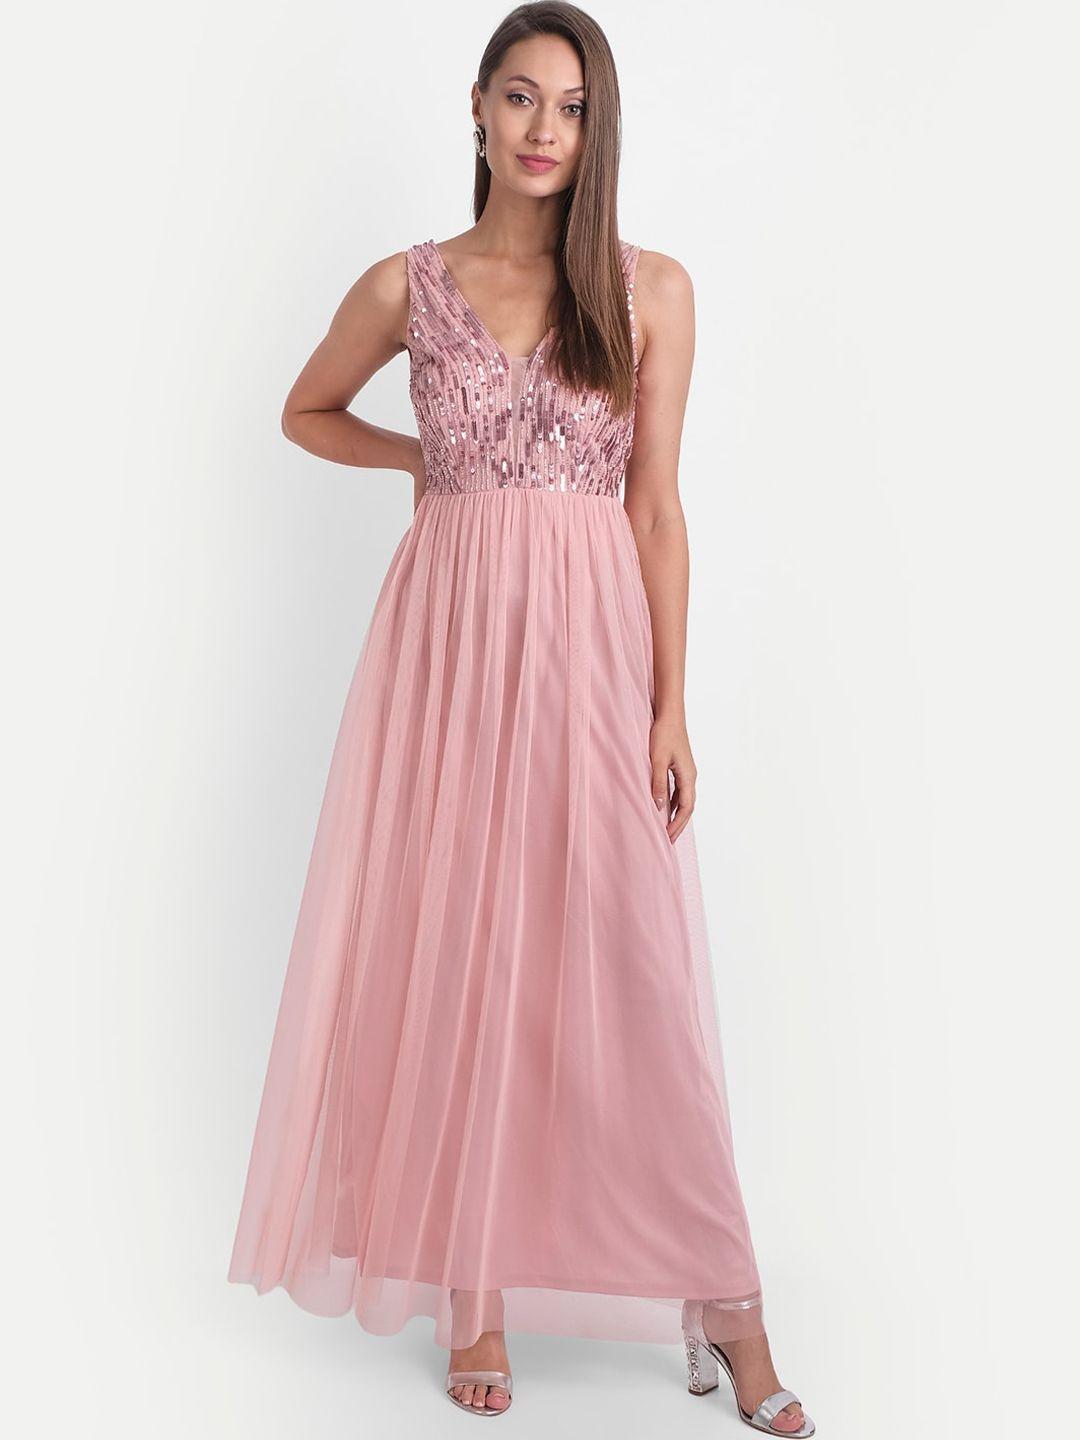 ly2 pink embellished net maxi dress